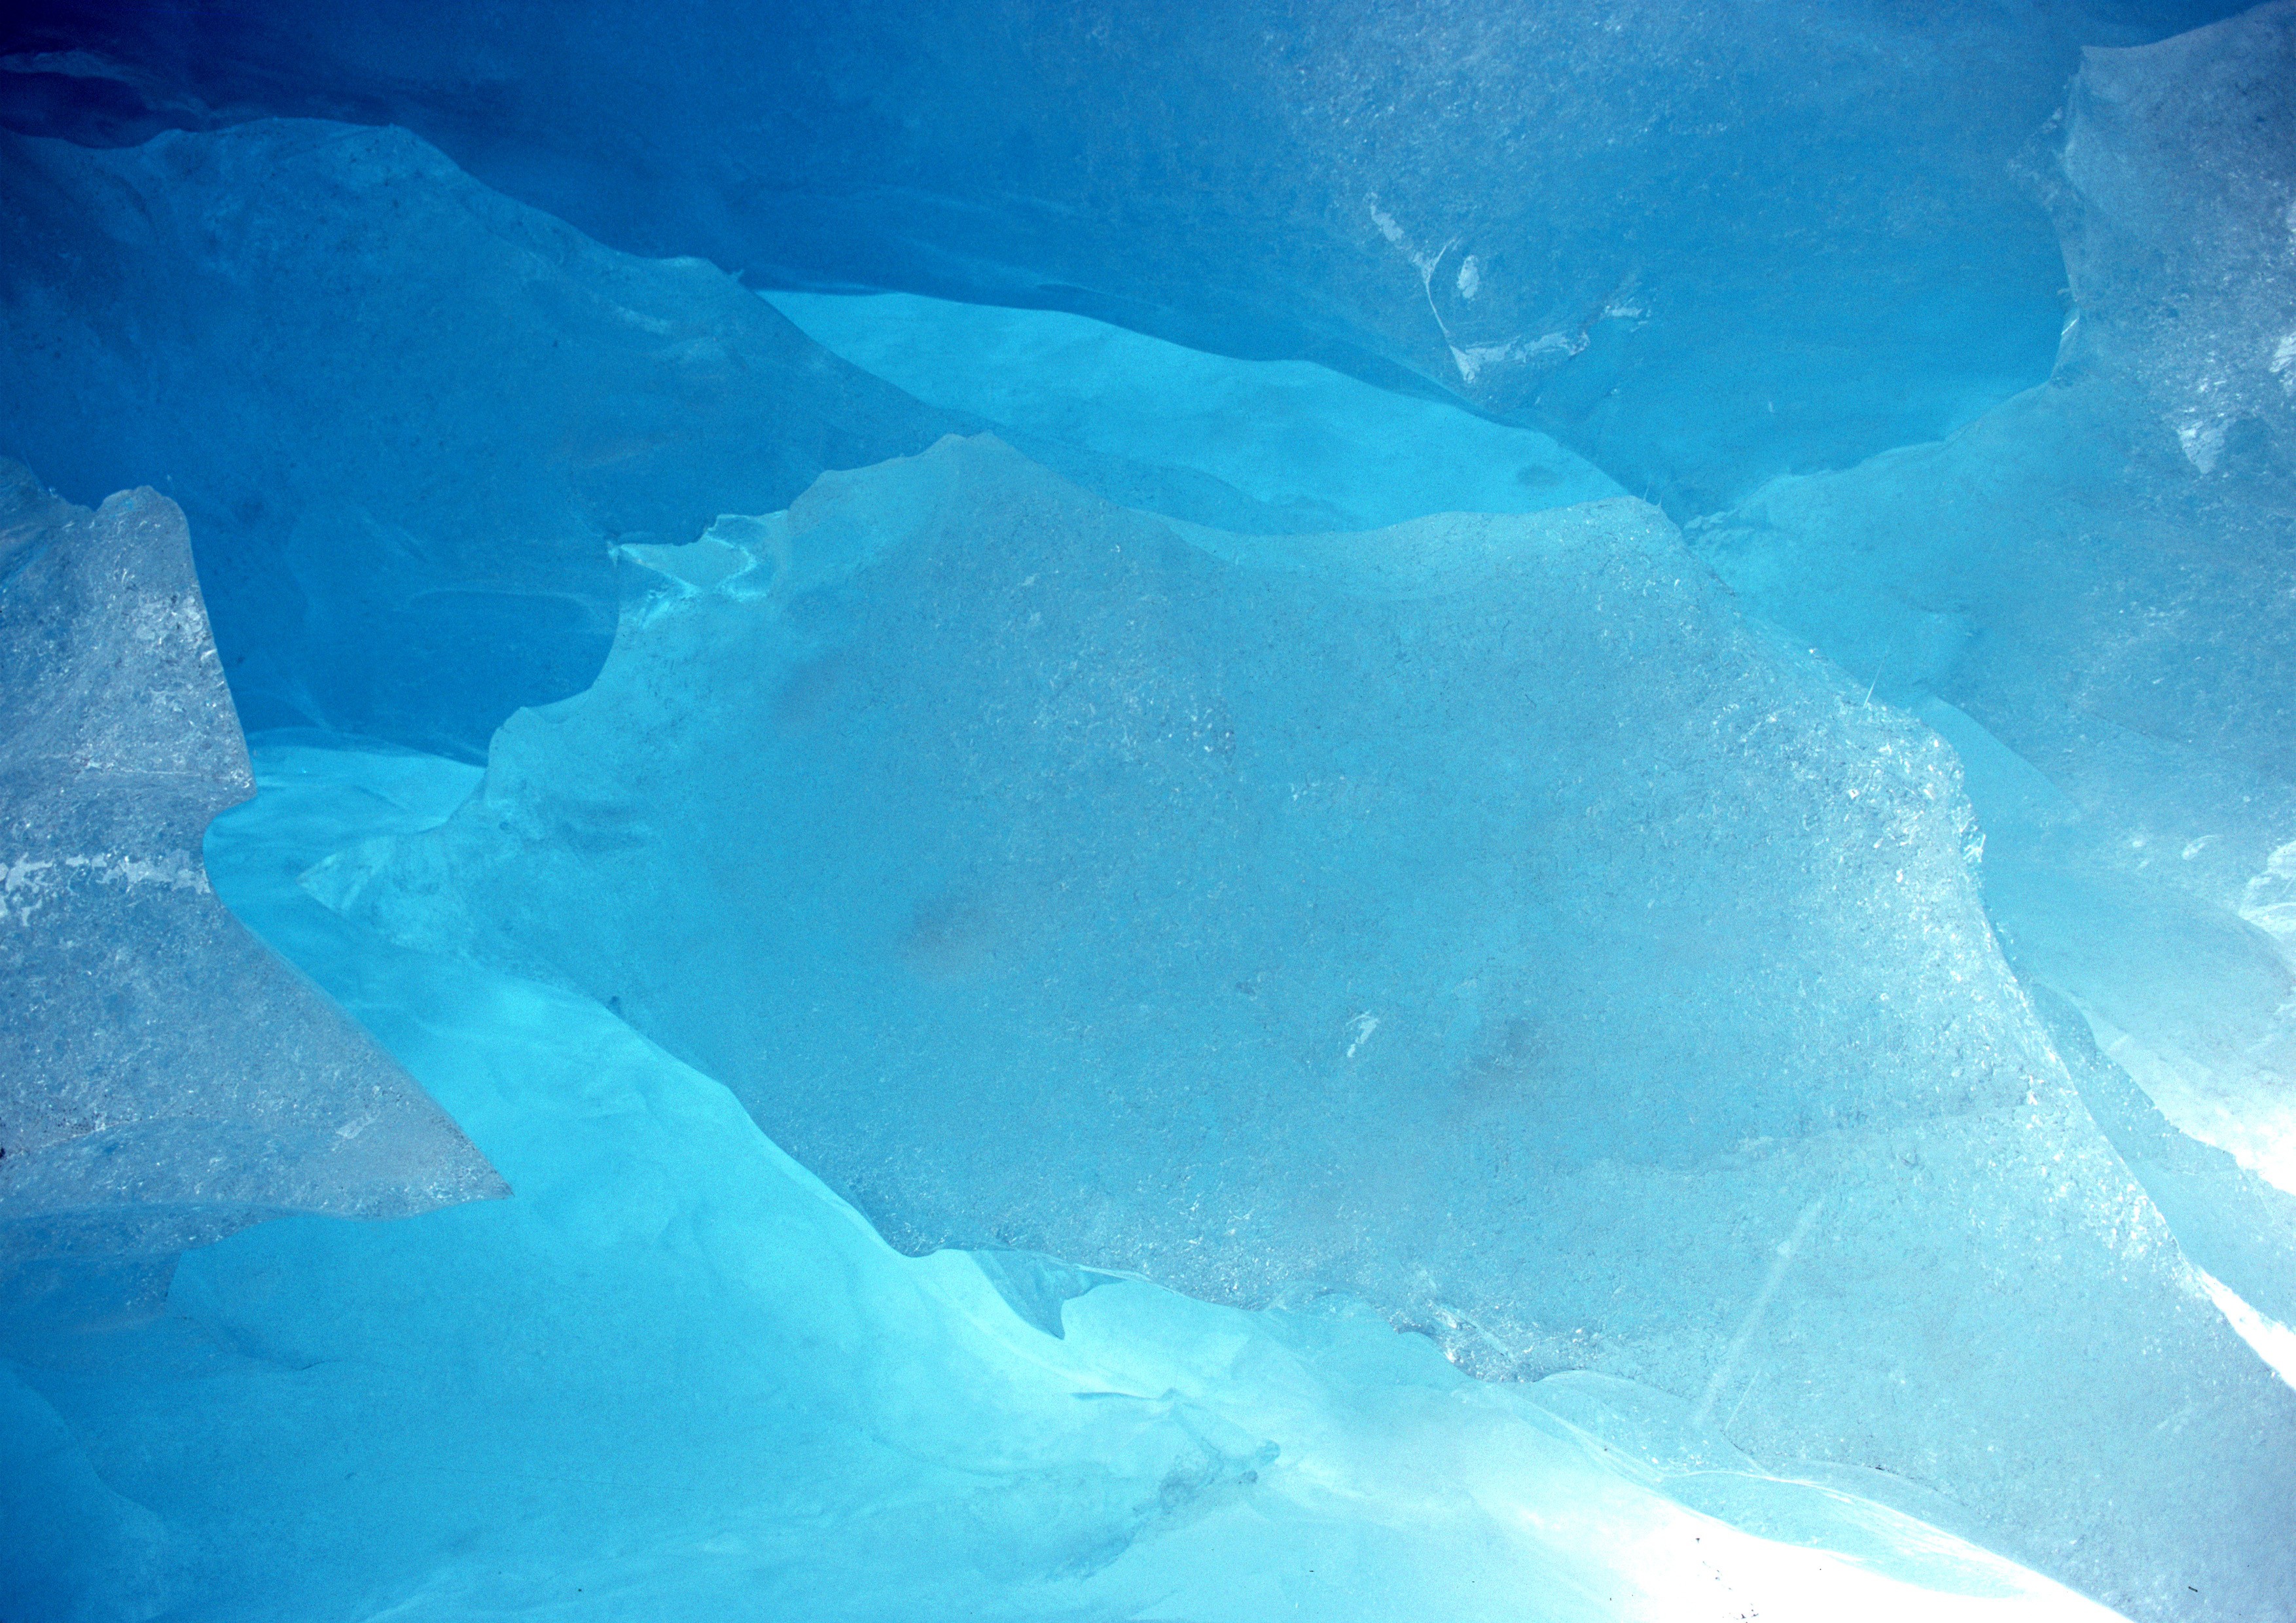 Texture ice, ice, download photo, frozen water, download texture ice ...